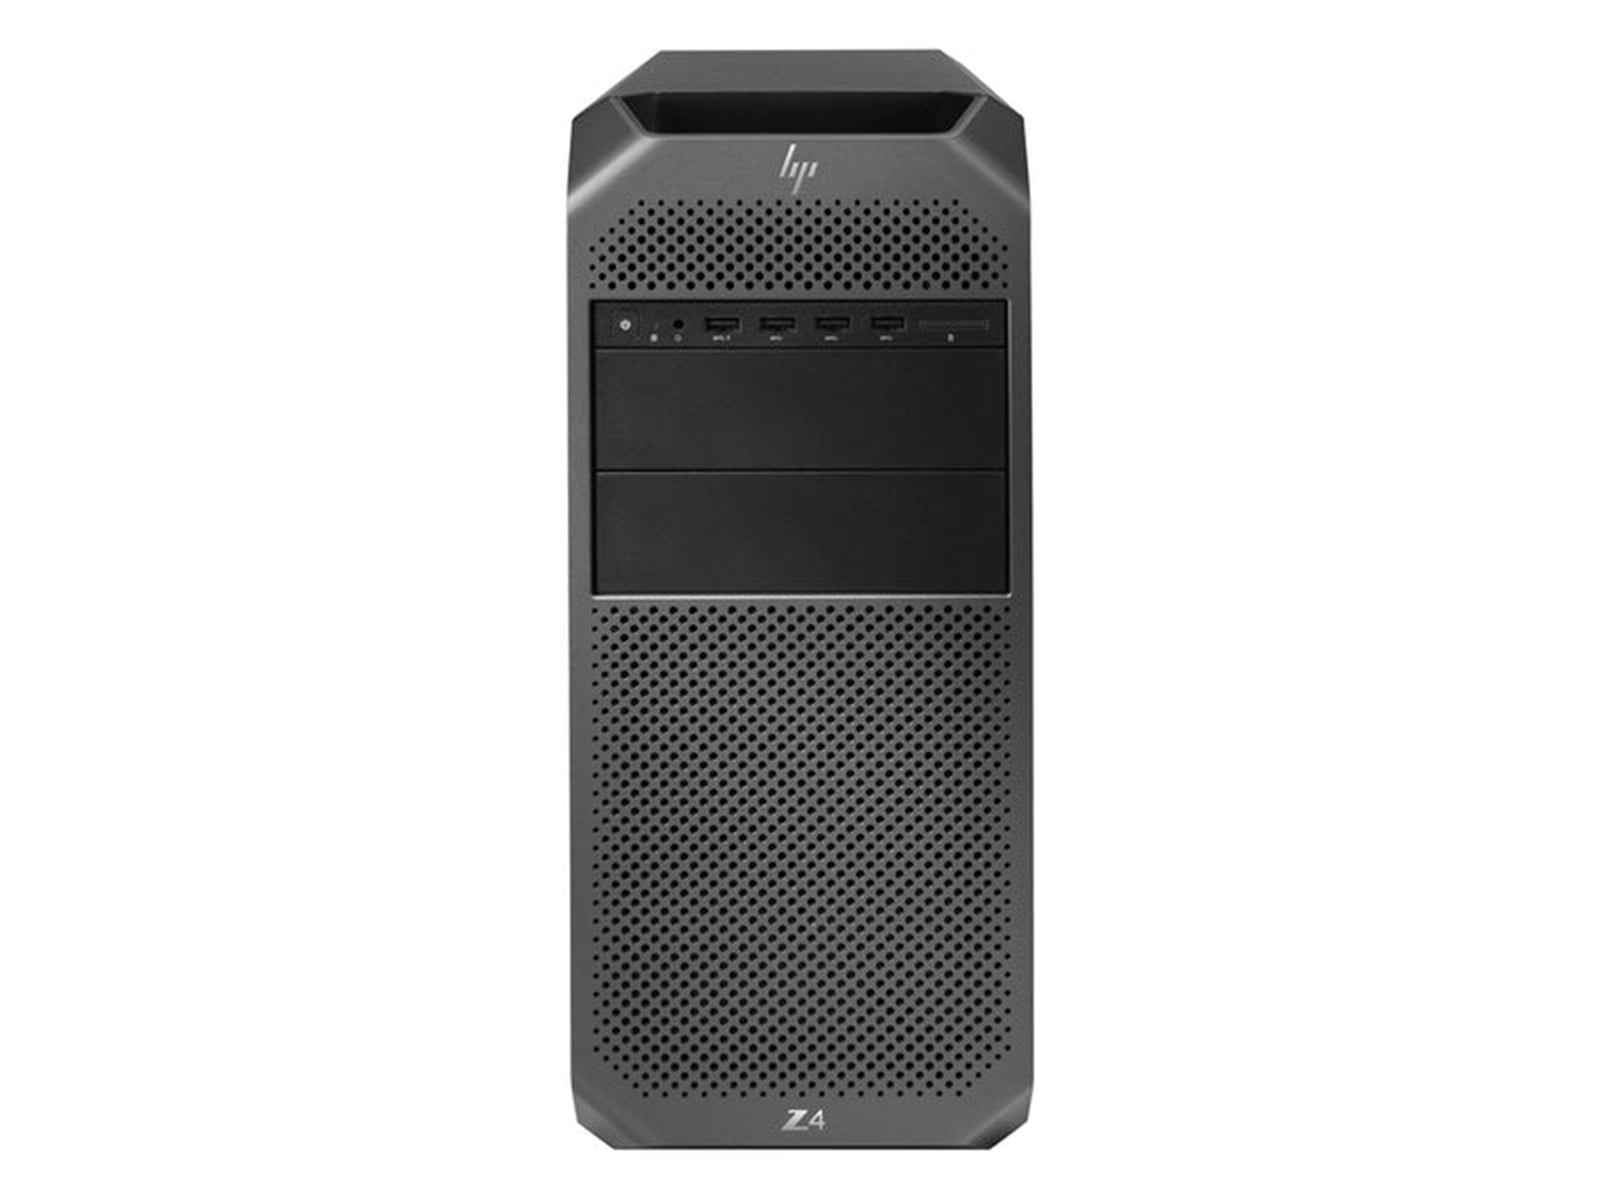 HP Z4 G4 Workstation | Intel Xeon W-2245 @ 4.50GHz | 8-core | 64GB ECC DDR4  | 1TB ZTurbo NVMe SSD | Quadro RTX 4000 | Win10 Pro Monitors.com 